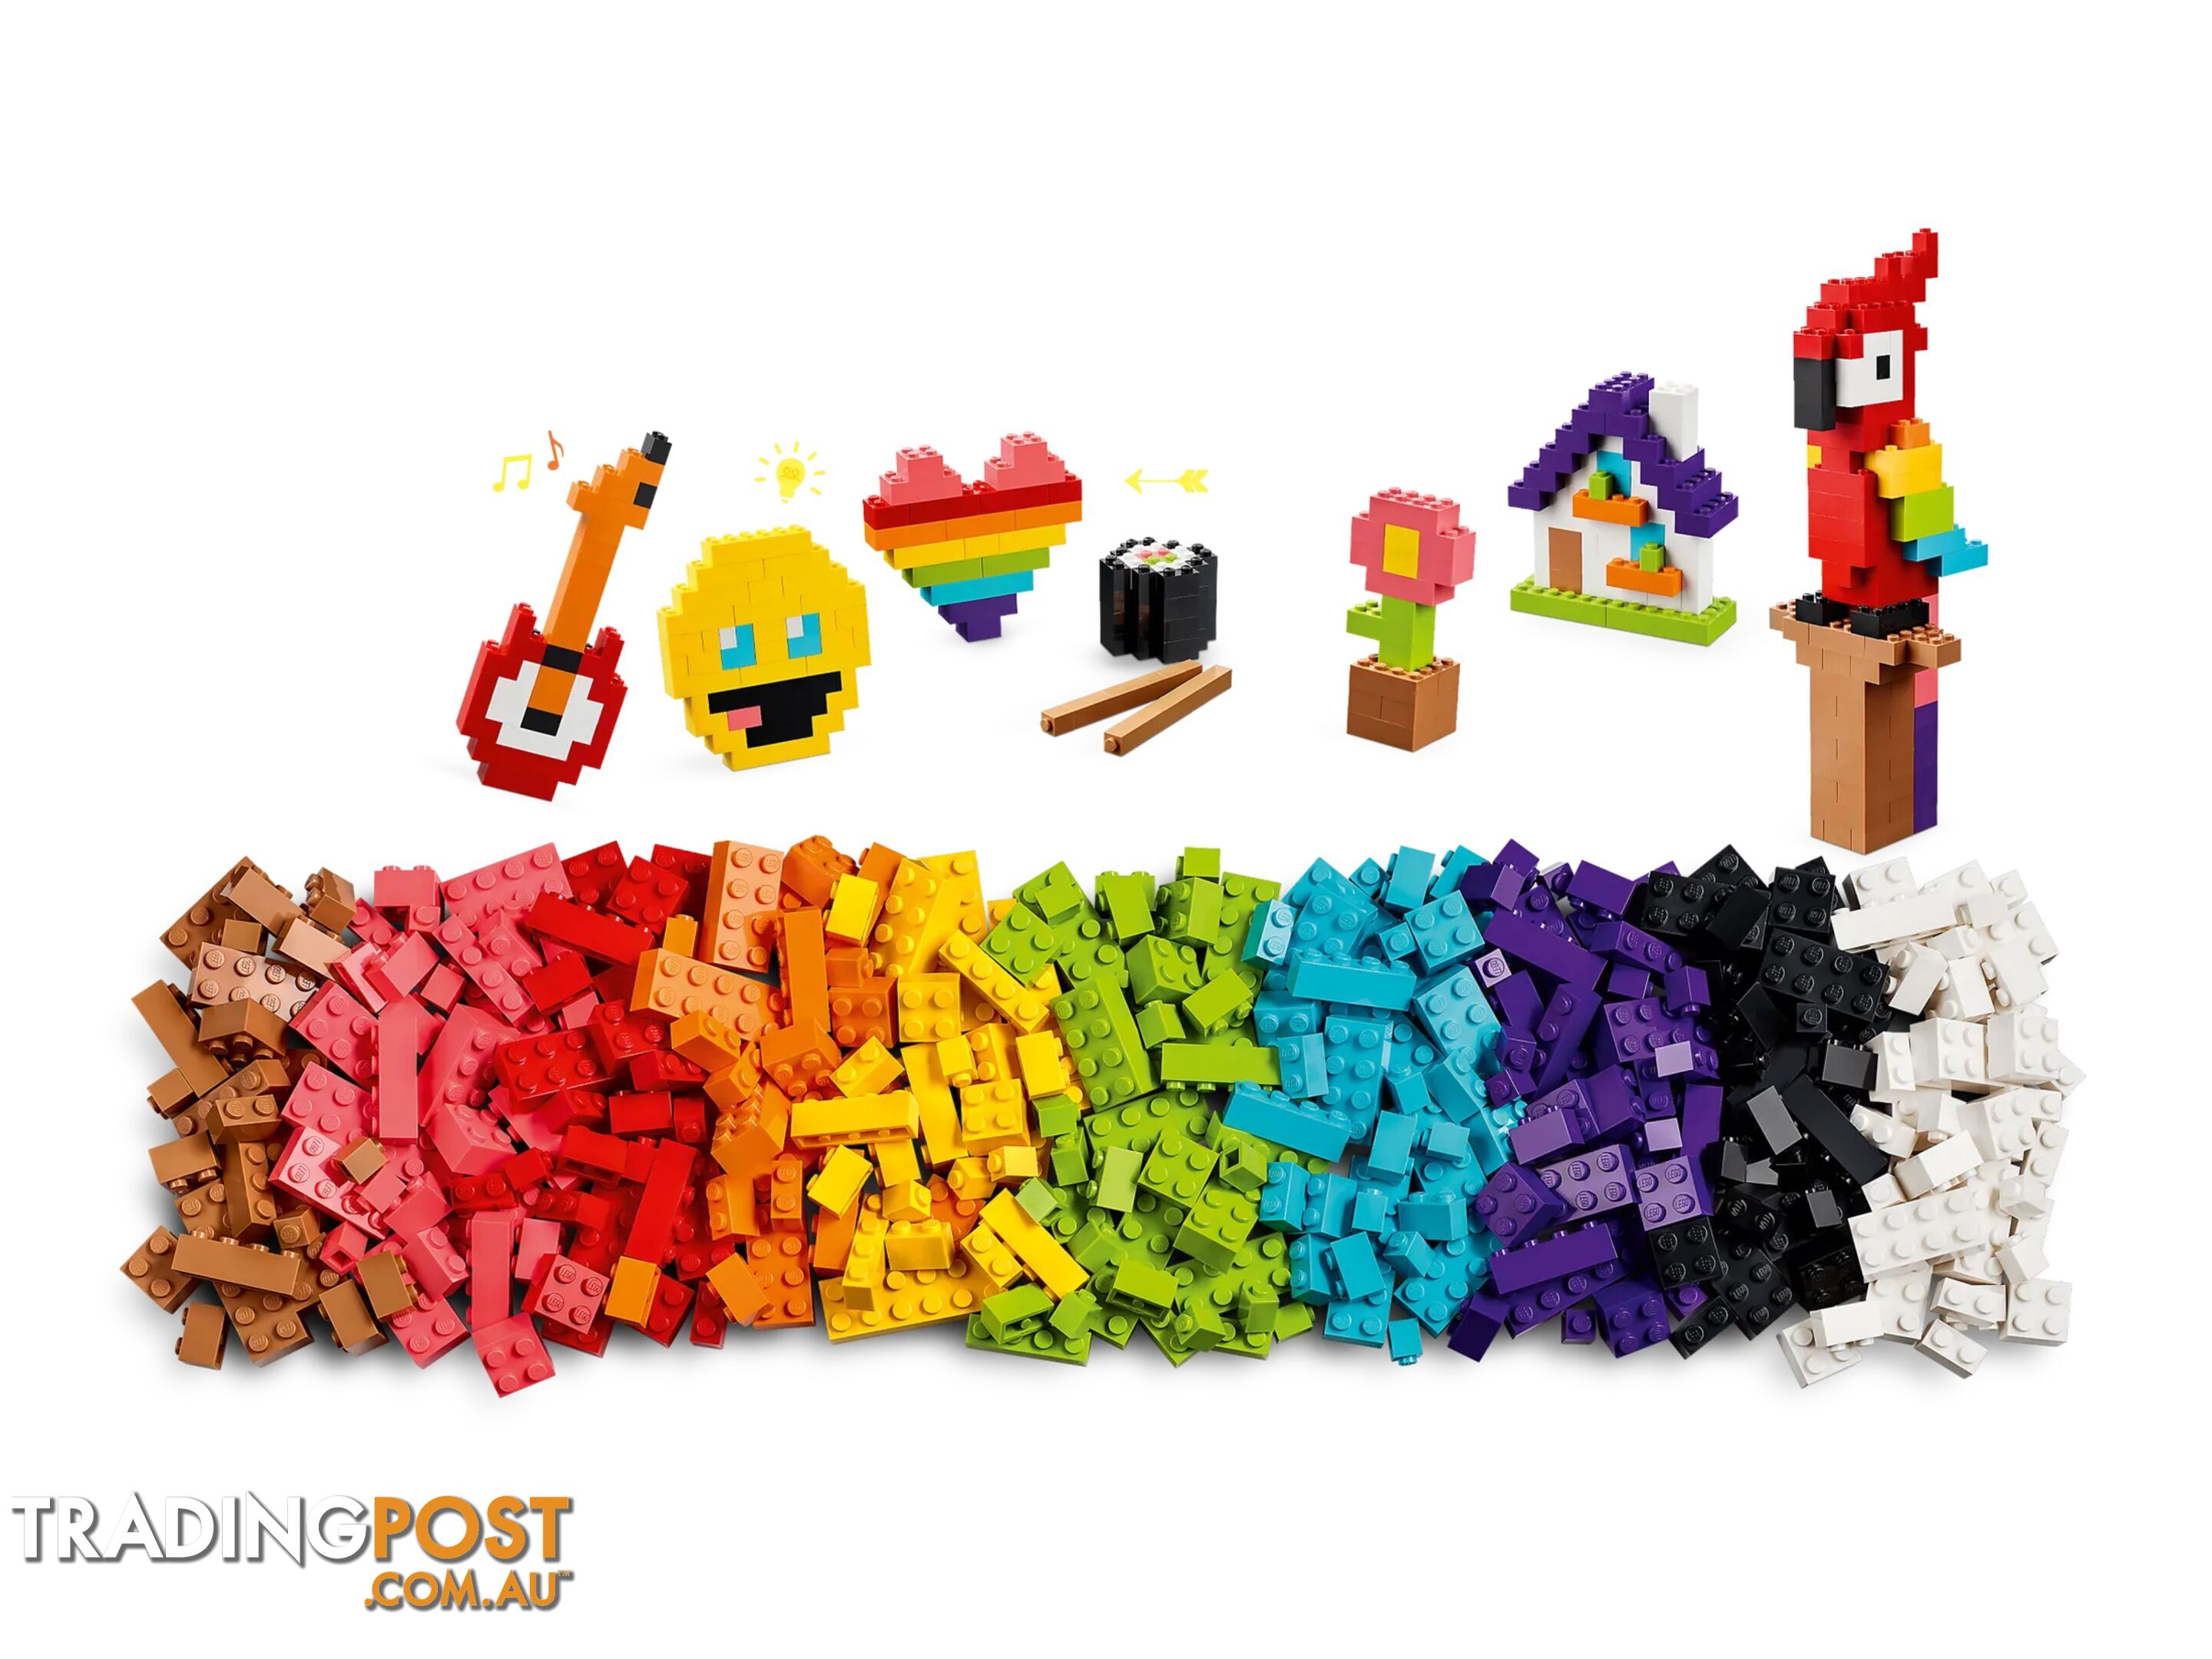 LEGO 11030 Lots of Bricks - Classic - 5702017415147